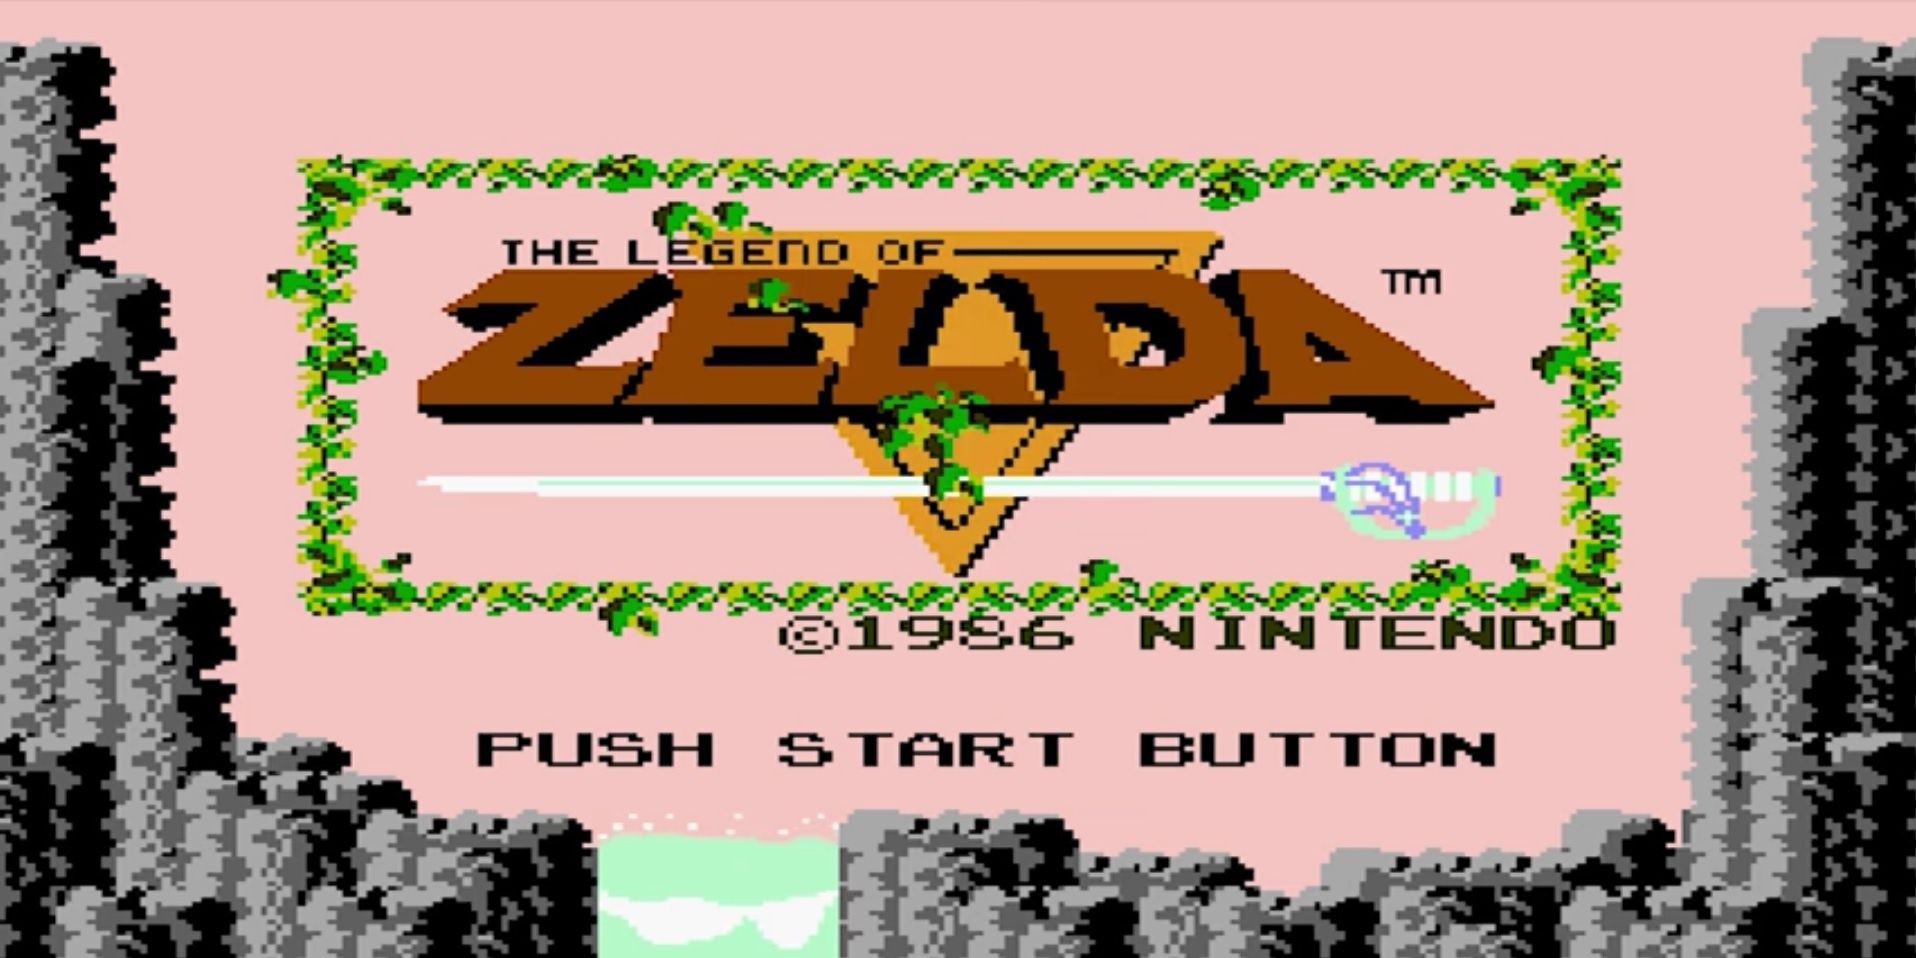 The Legend of Zelda on NES title screen